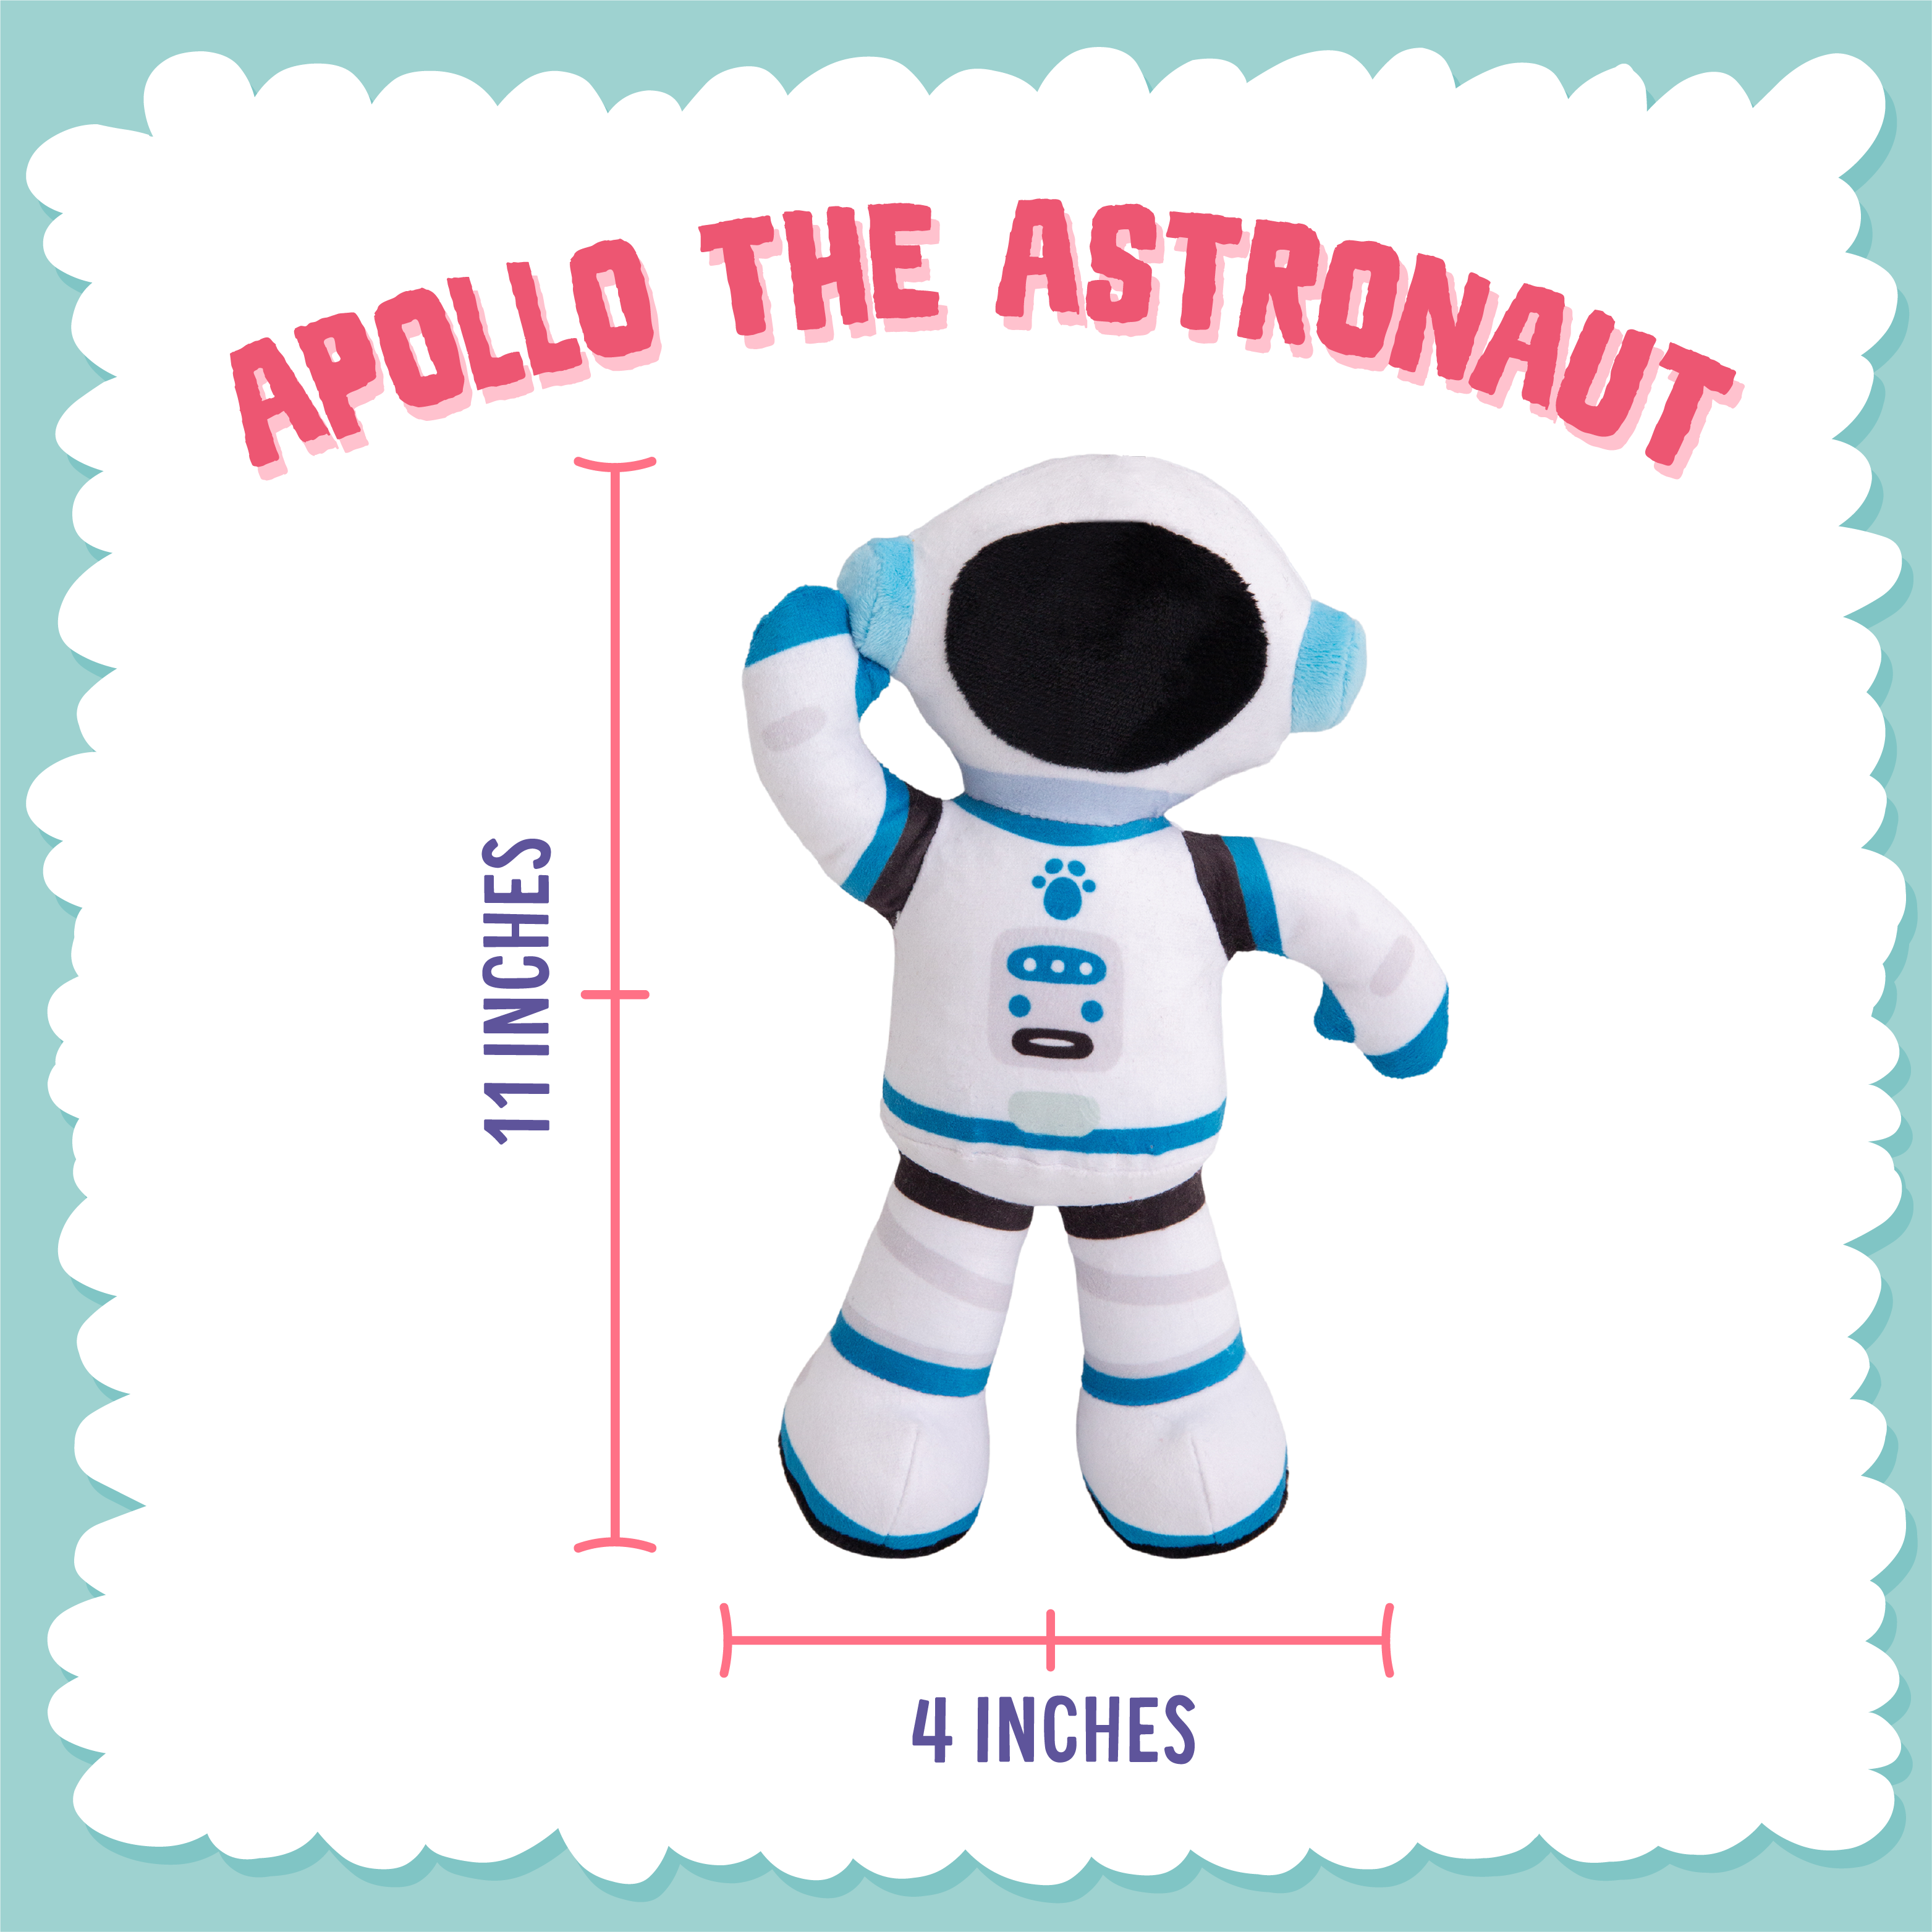 Apollo the Astronaut